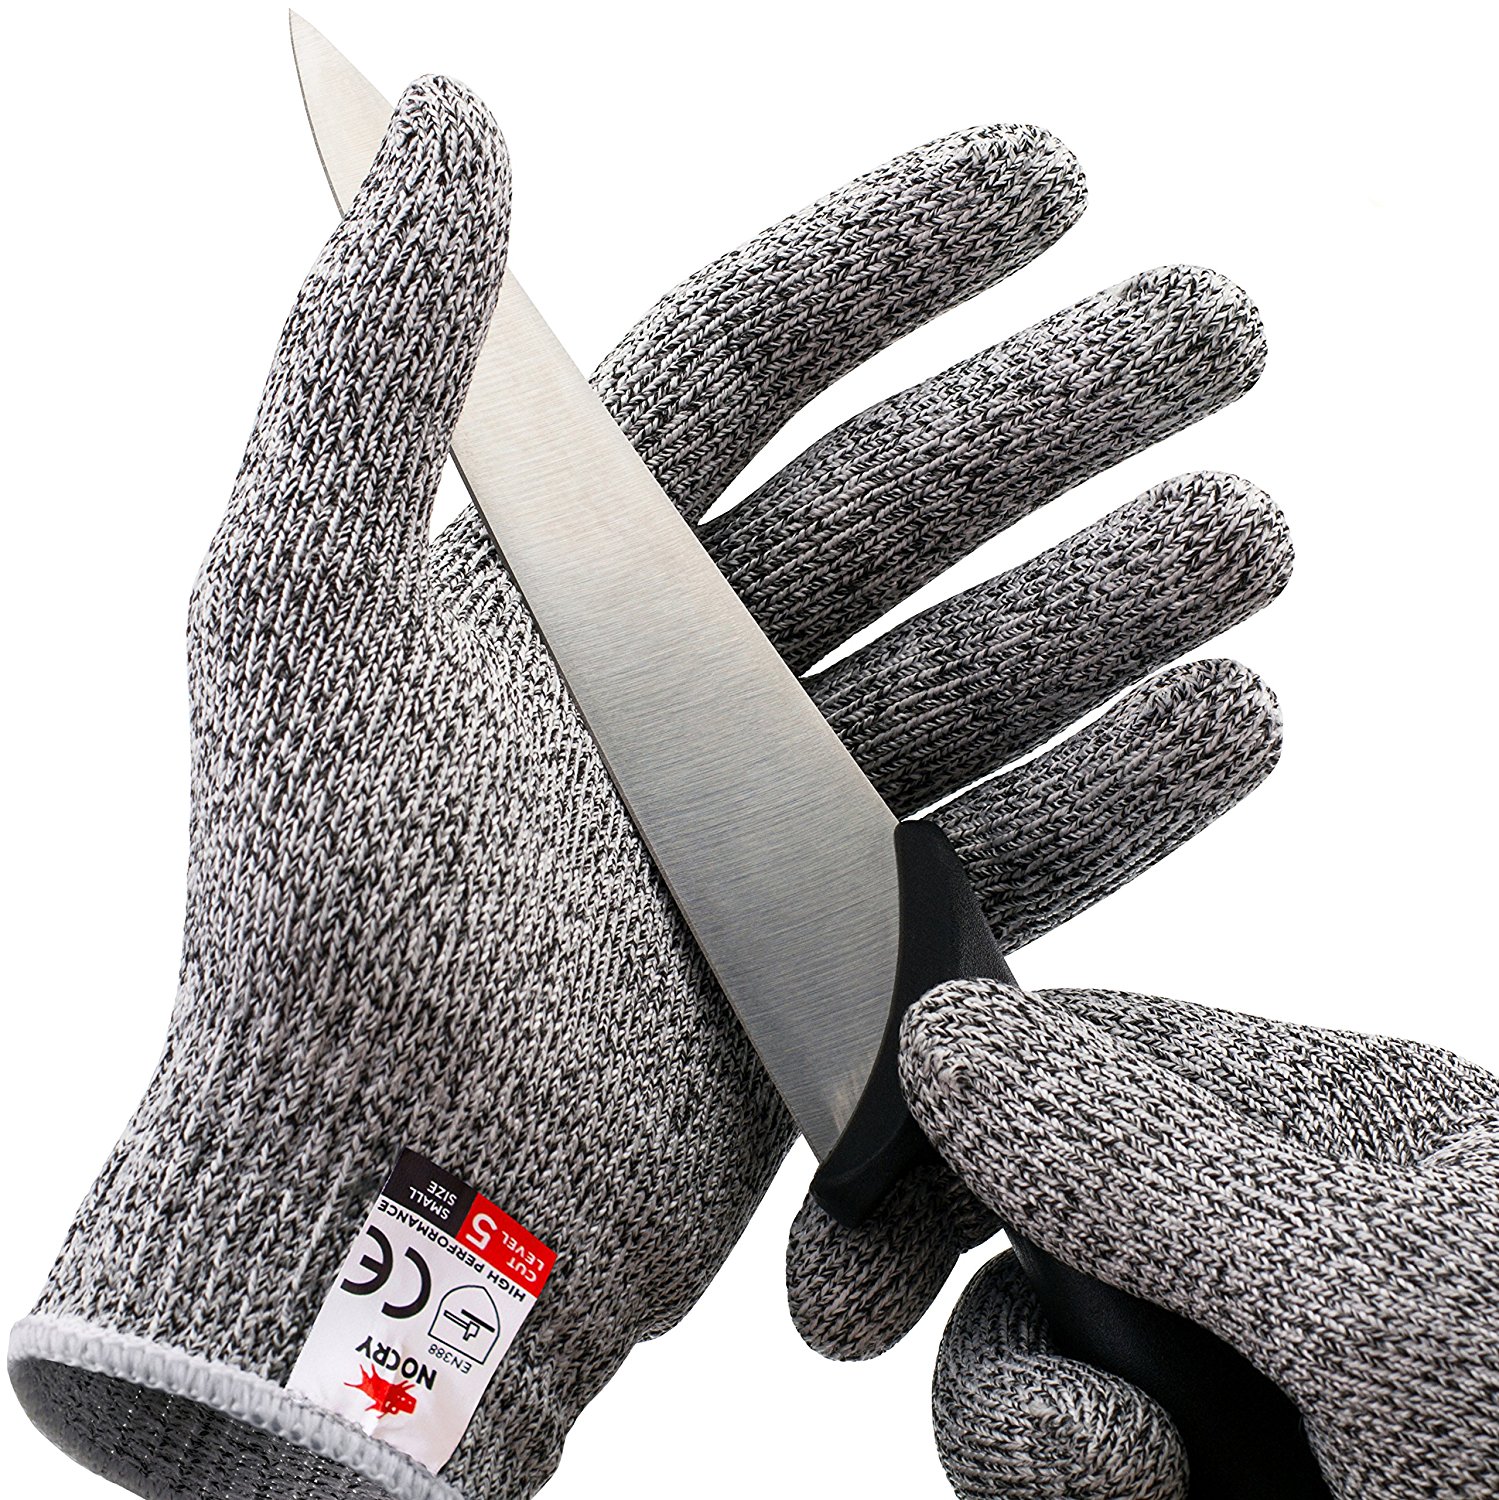 3-Stage Manual Knife Sharpener & Cut-Resistant Glove